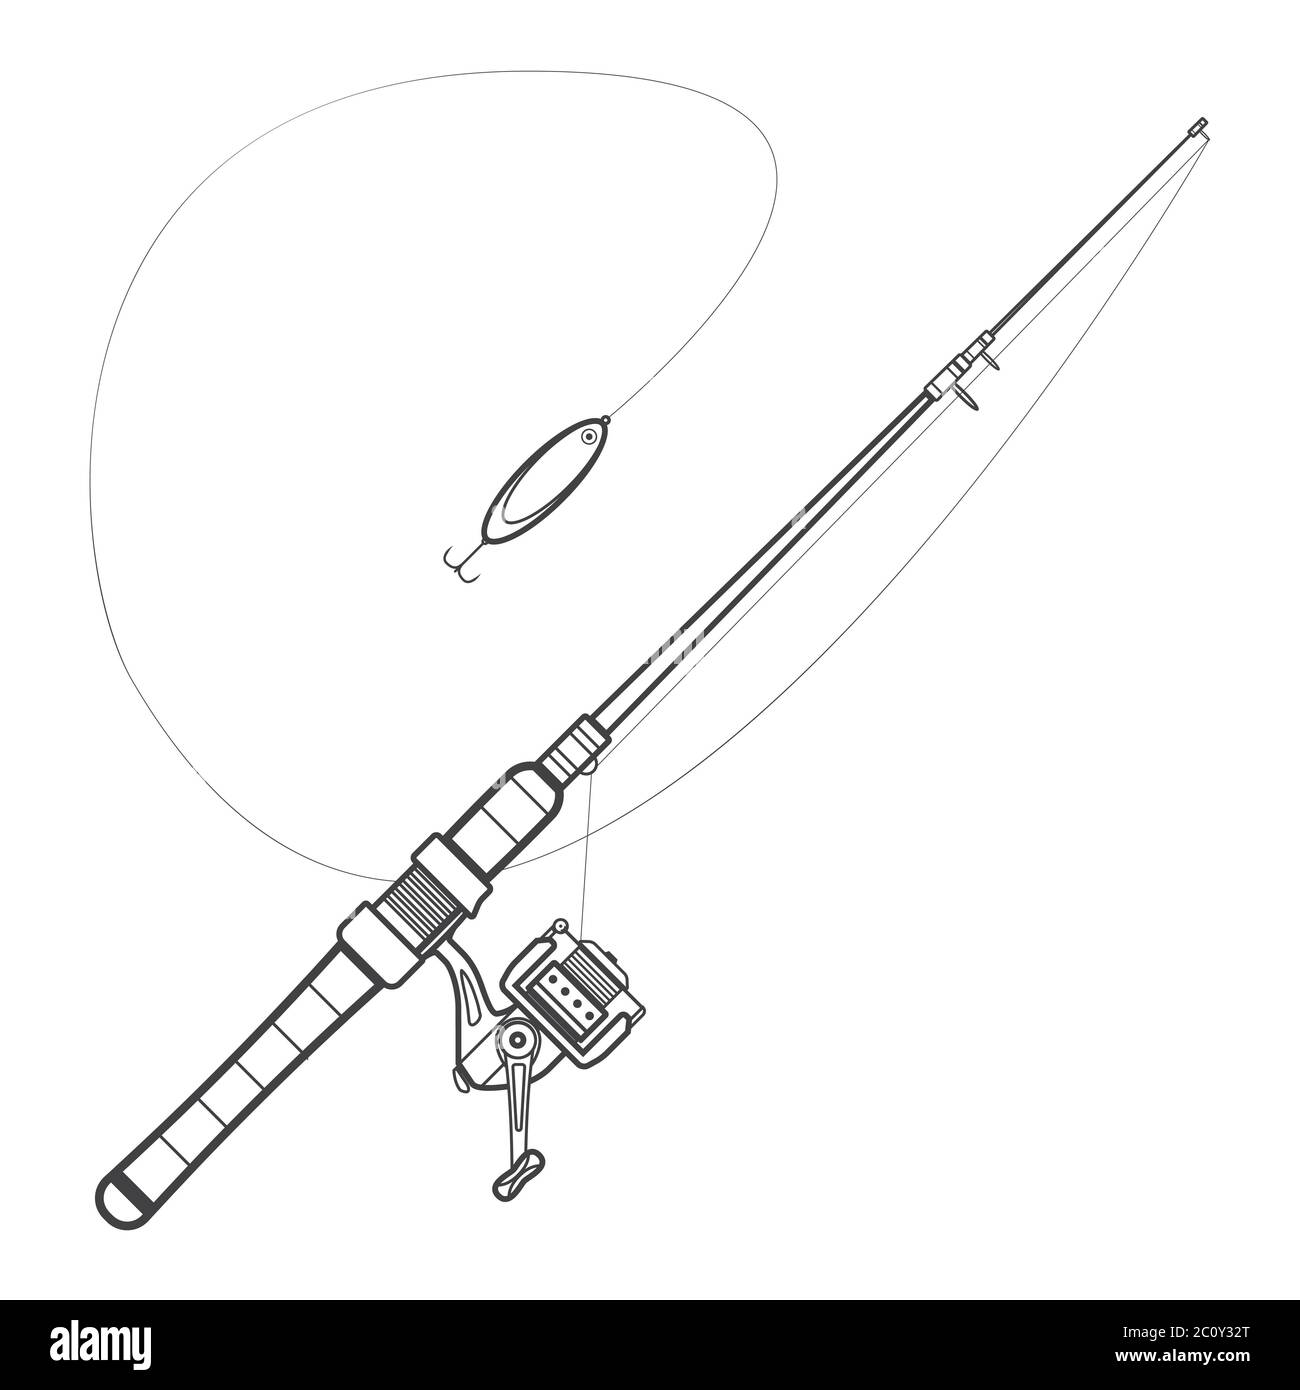 outline spinning fishing rod illustration Stock Photo - Alamy